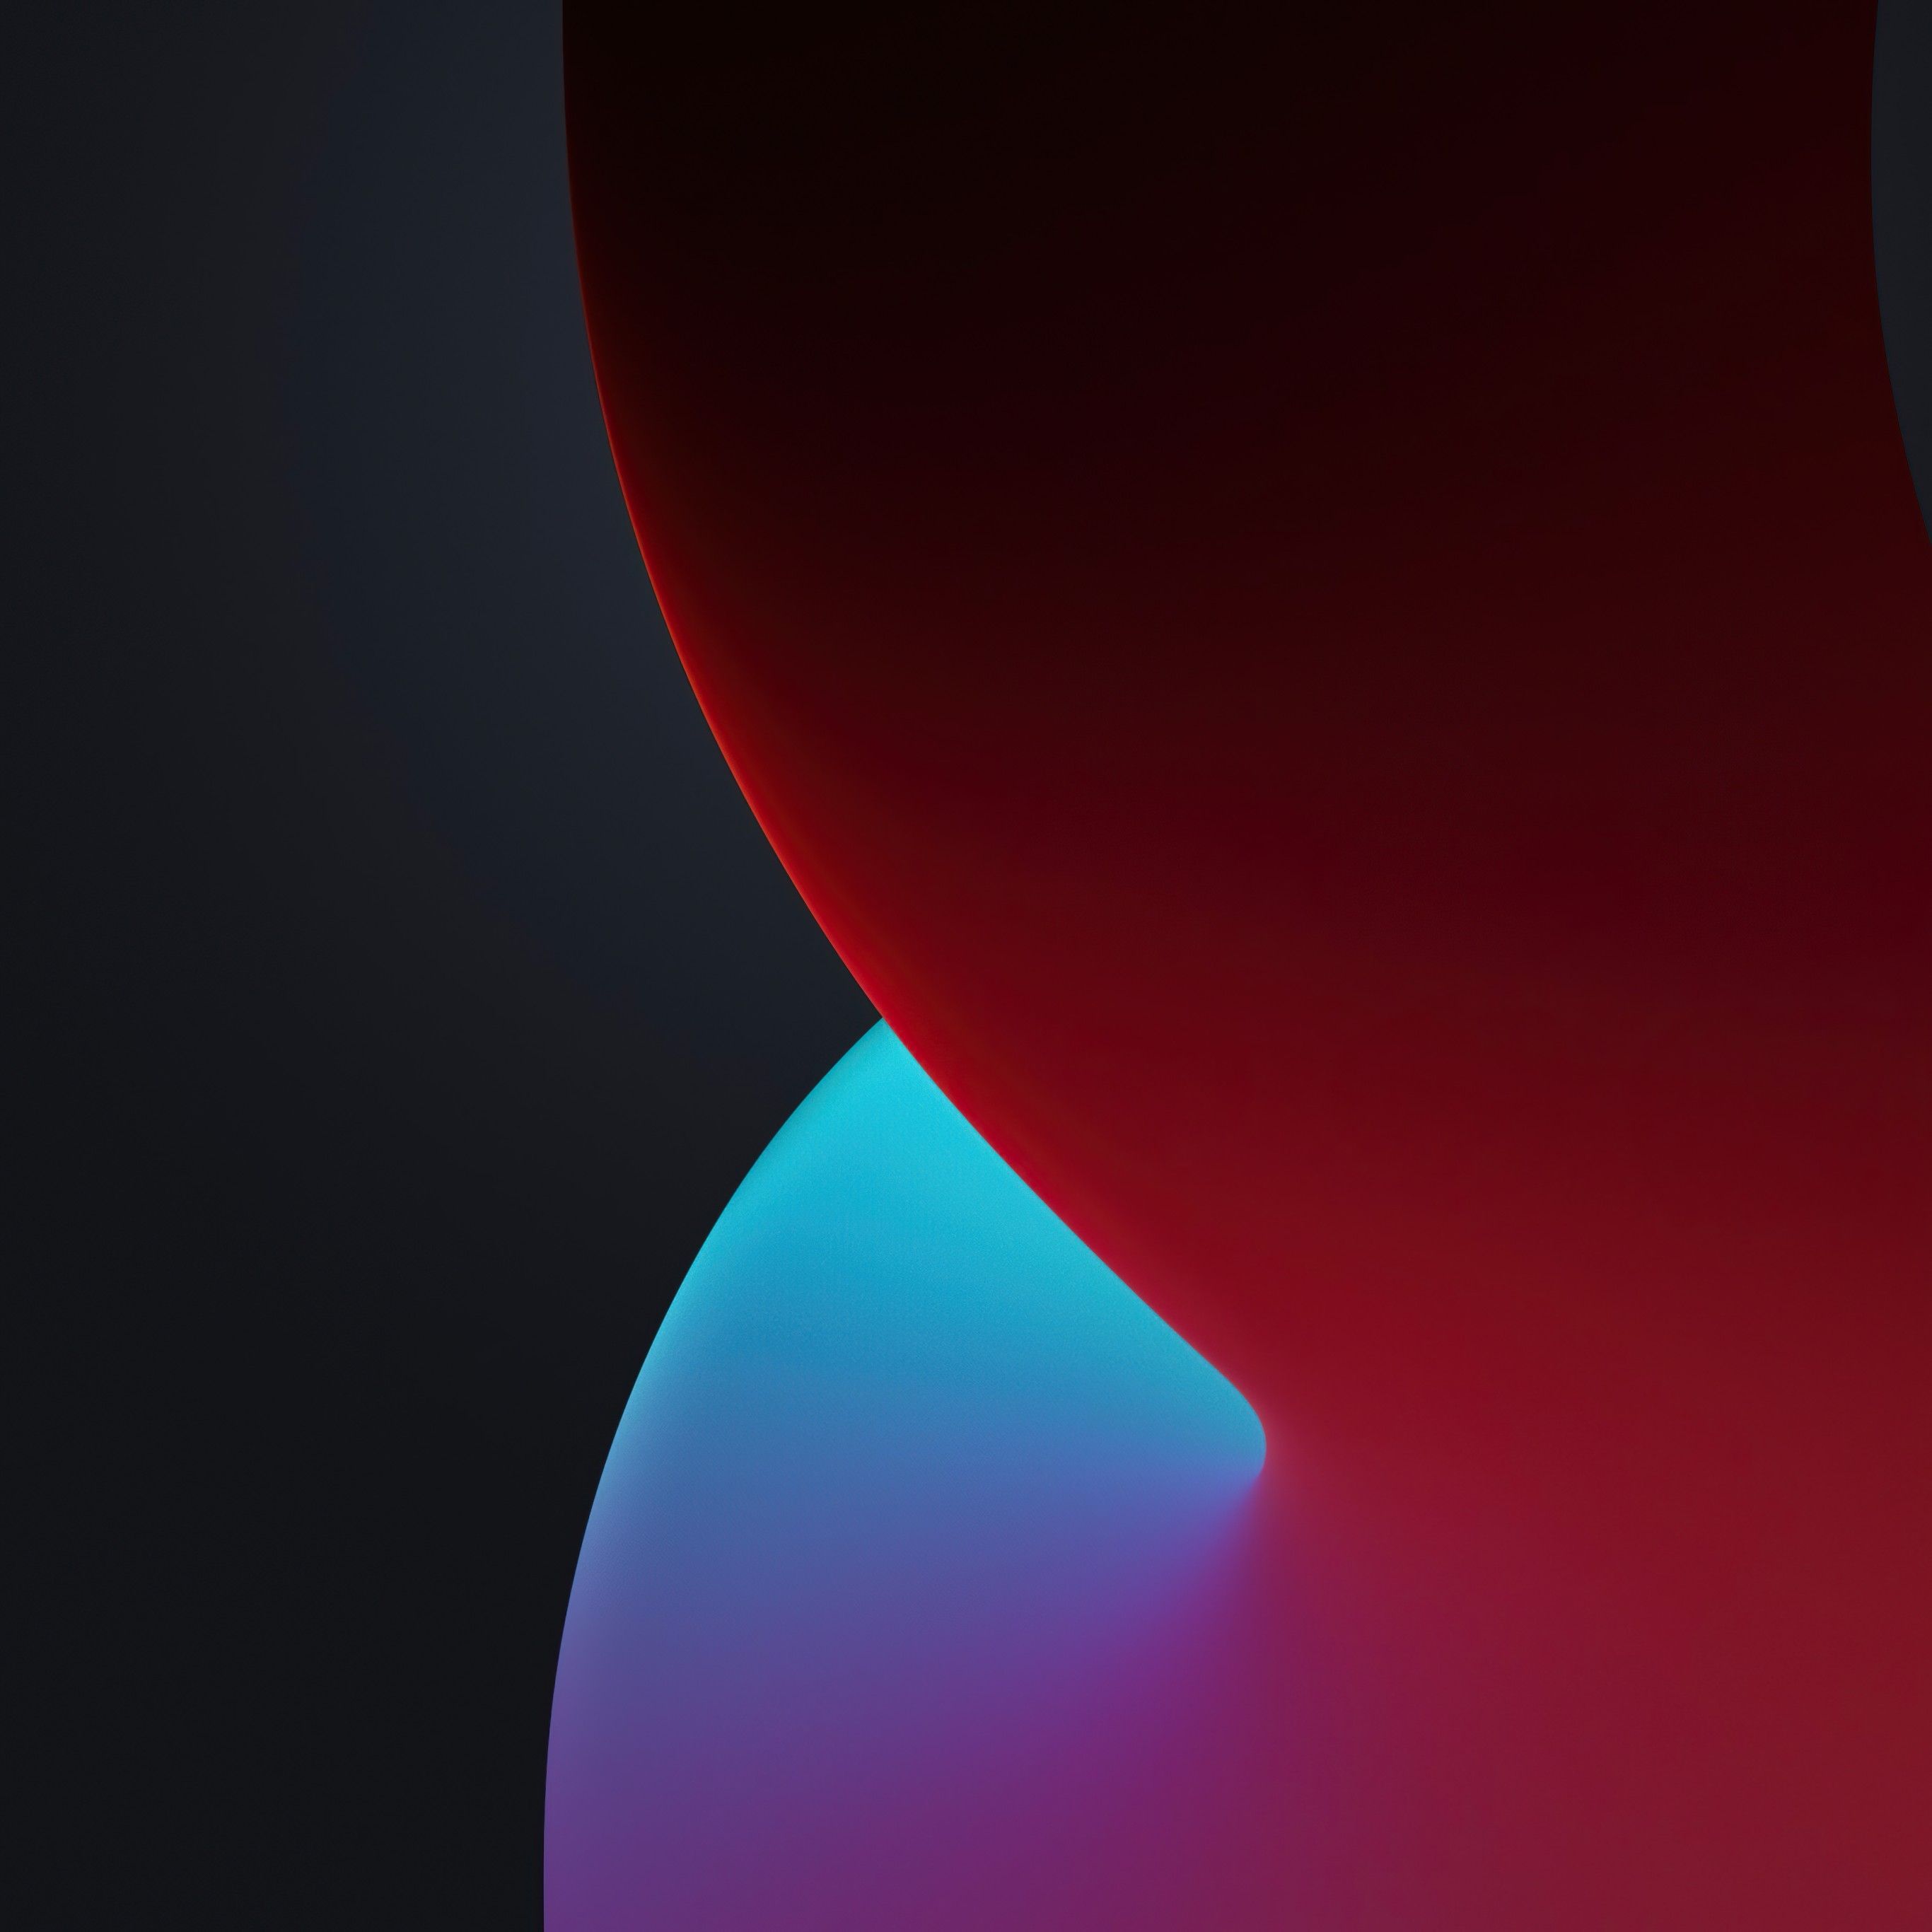 iOS 14 4K Wallpaper, WWDC, iPhone iPadOS, Dark, Red, Stock, Gradients